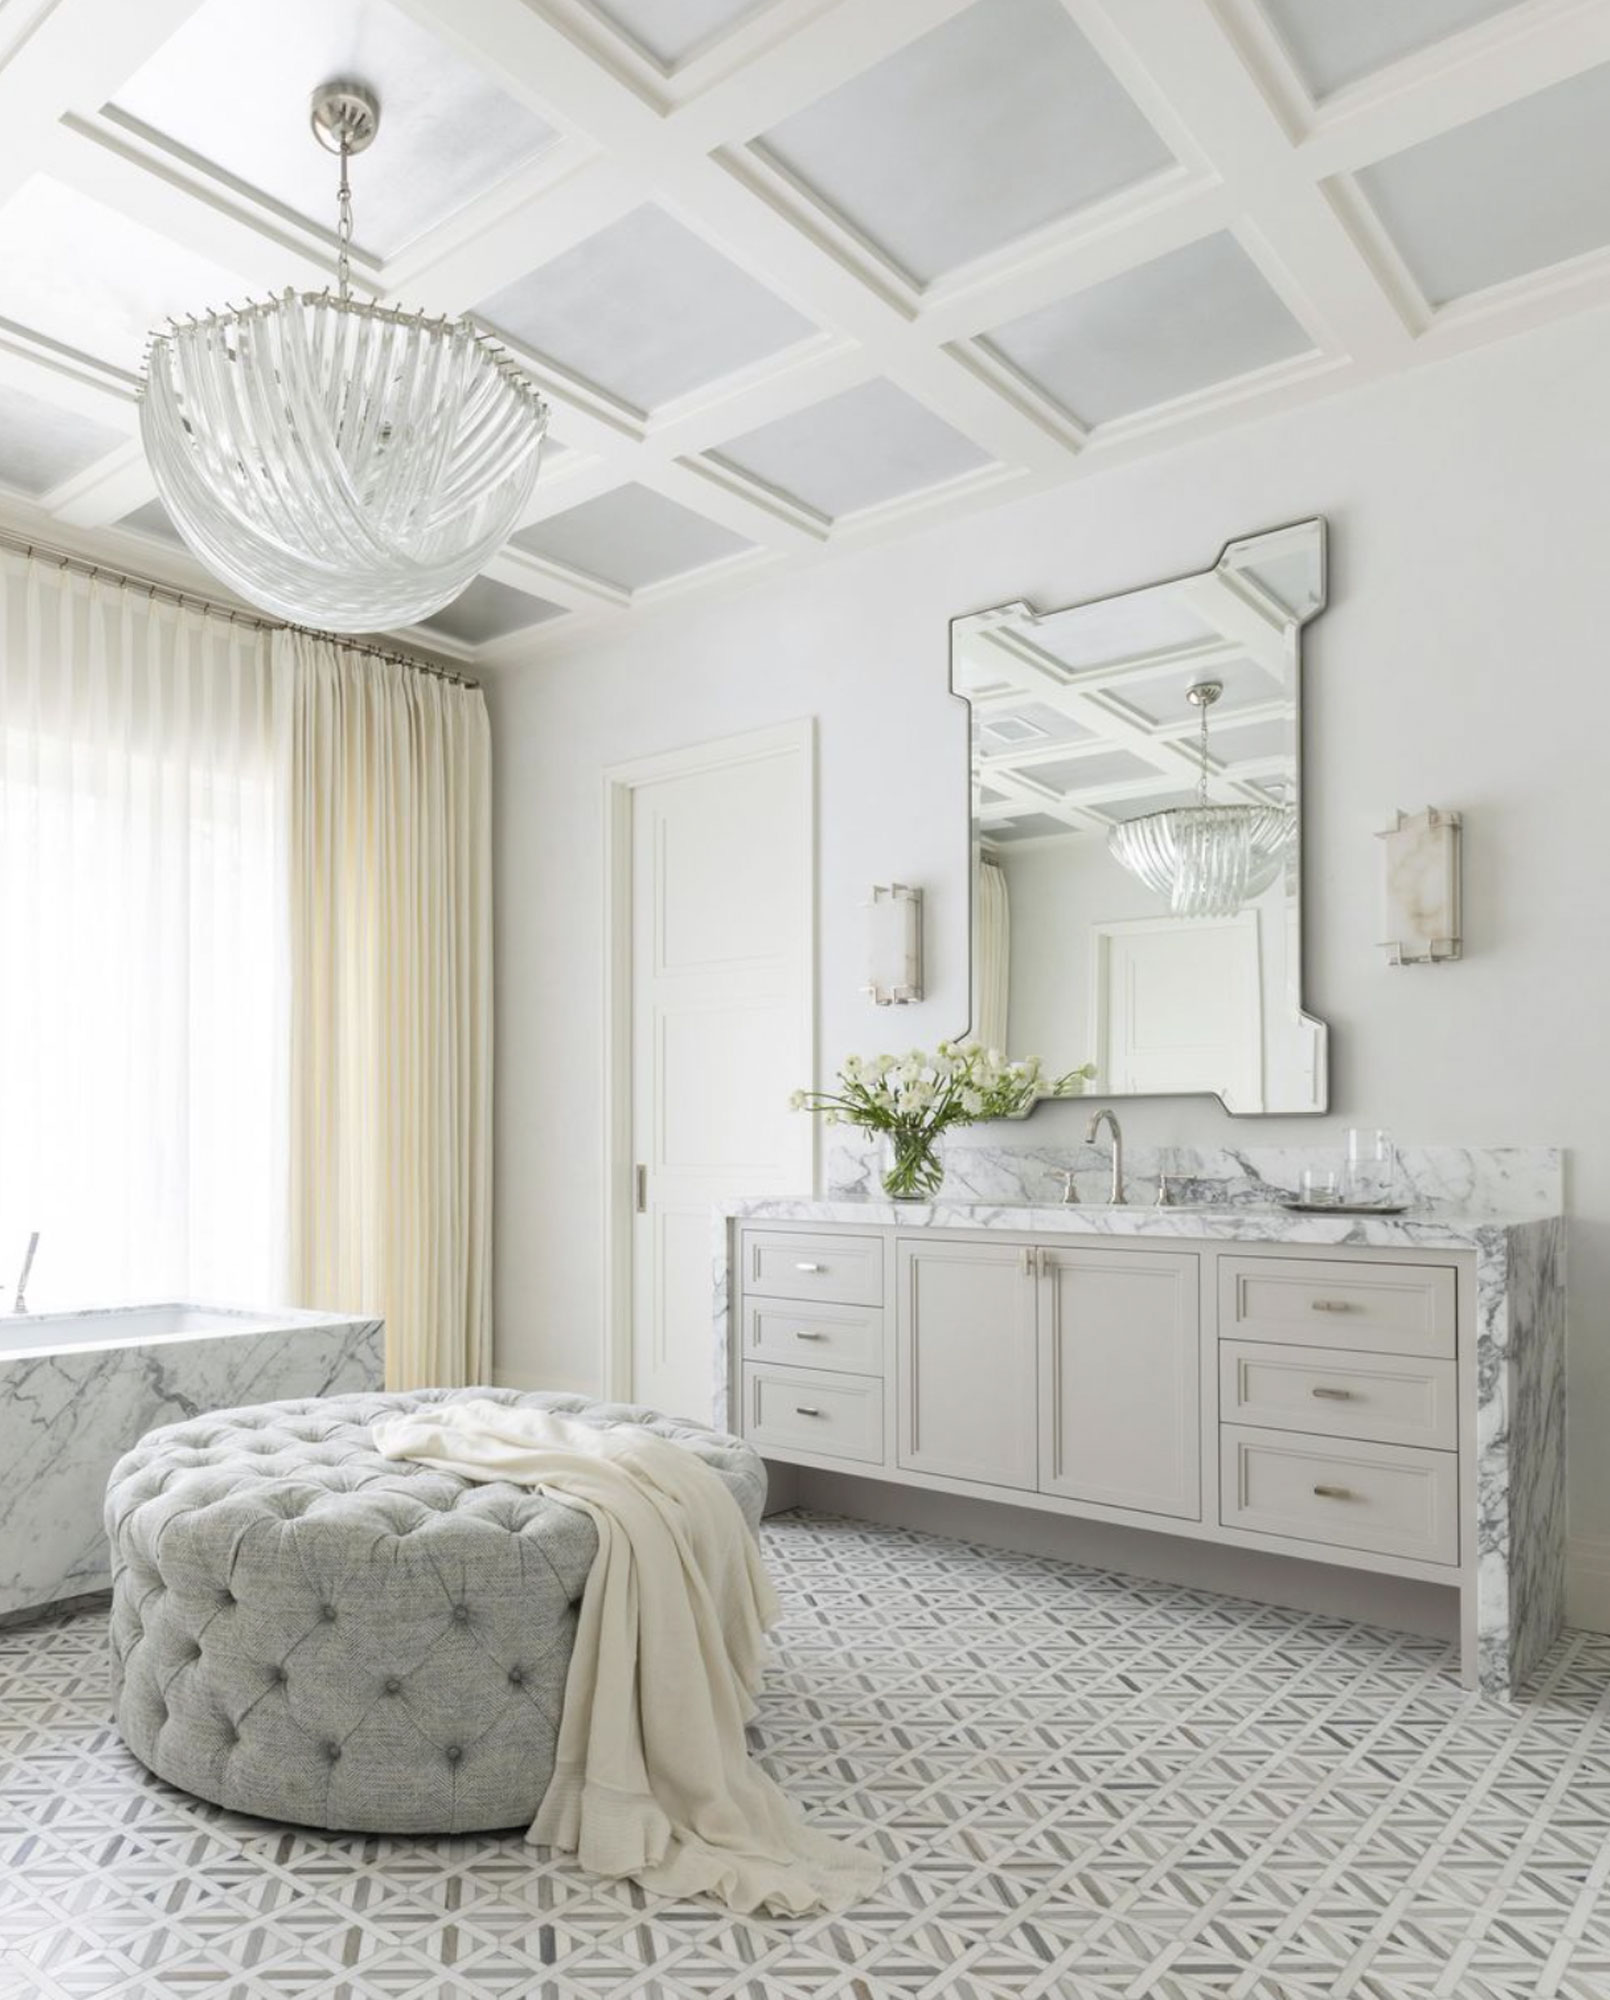 House Beautiful - A Houston Family Home Combines Warm Comfort With a “Modern Edge” - Main Bathroom